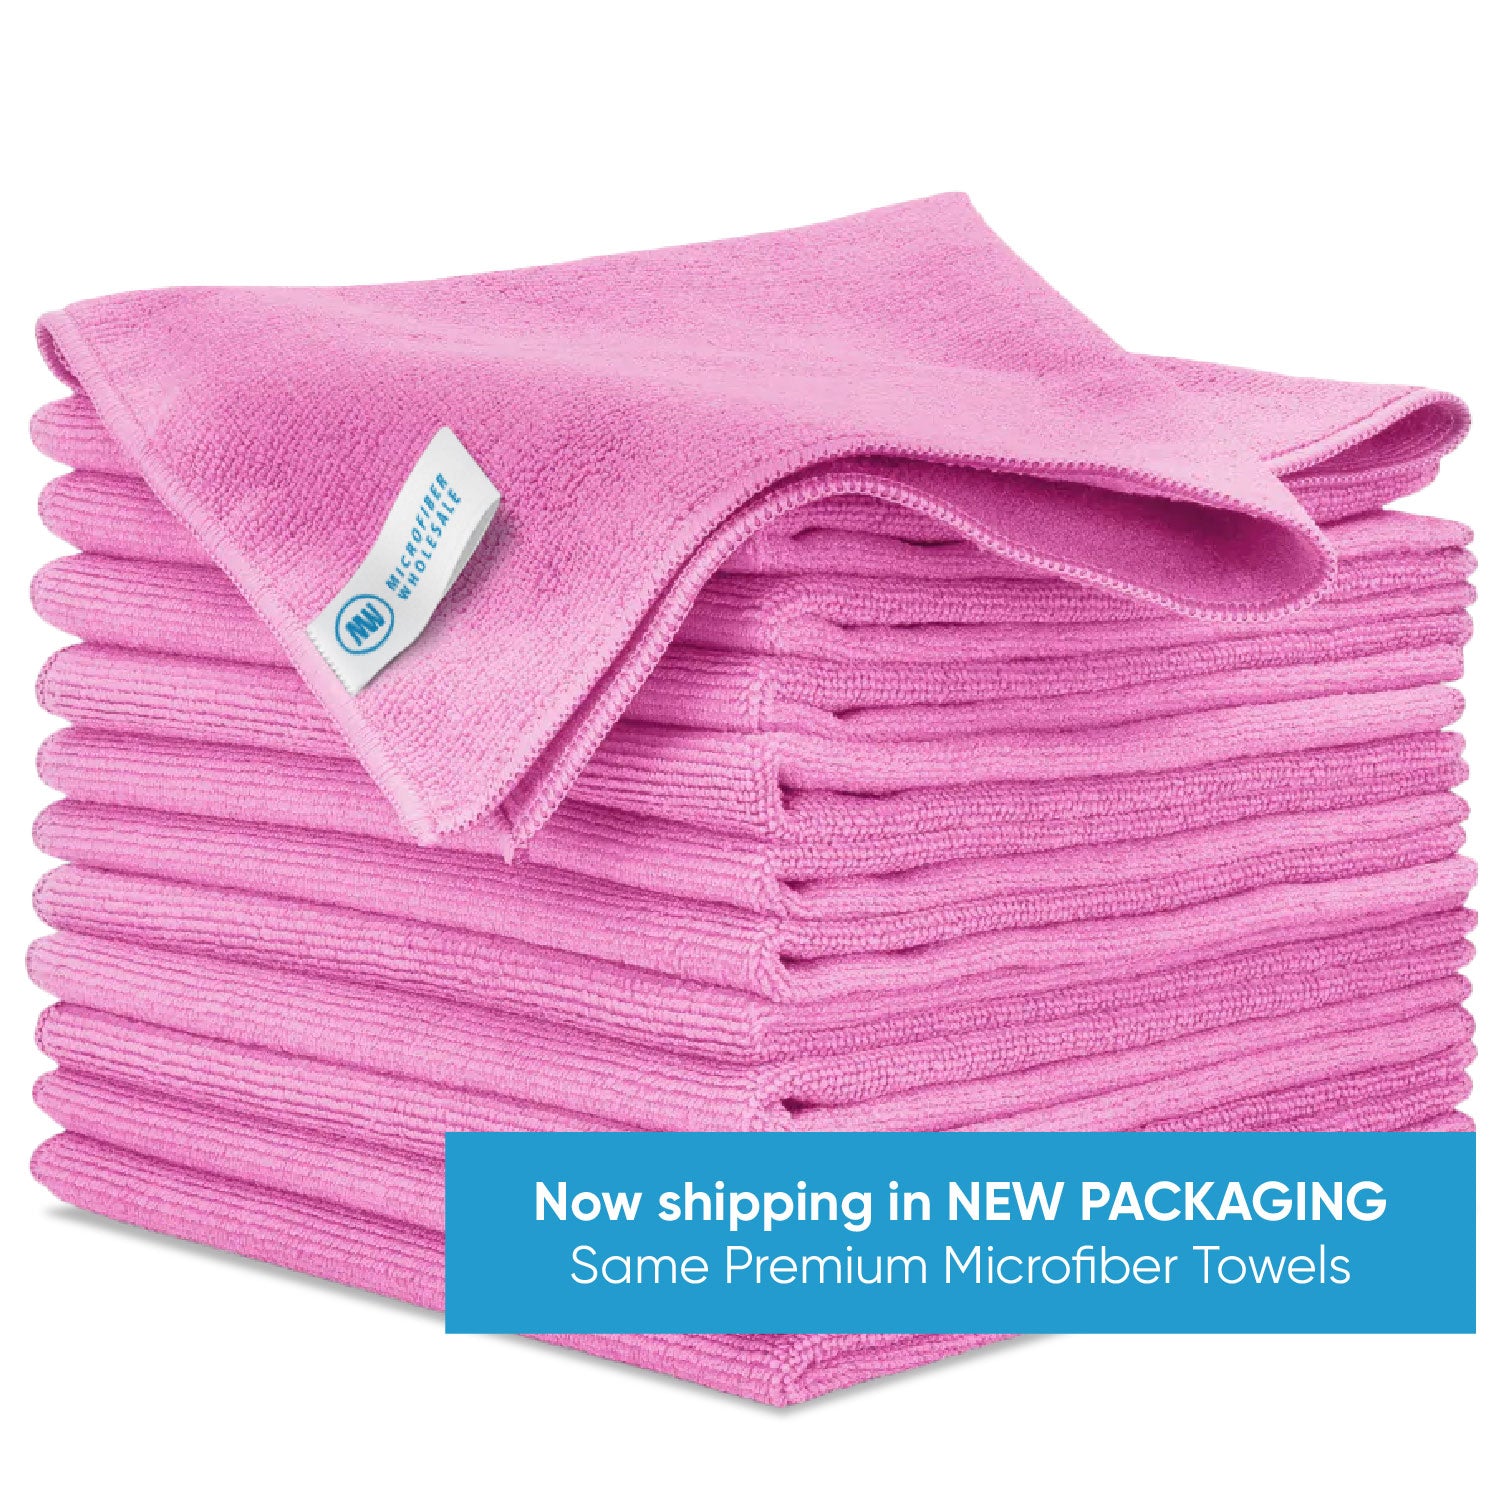 Maker's Clean Microfiber Cloth Bulk Pack (25-Pack)